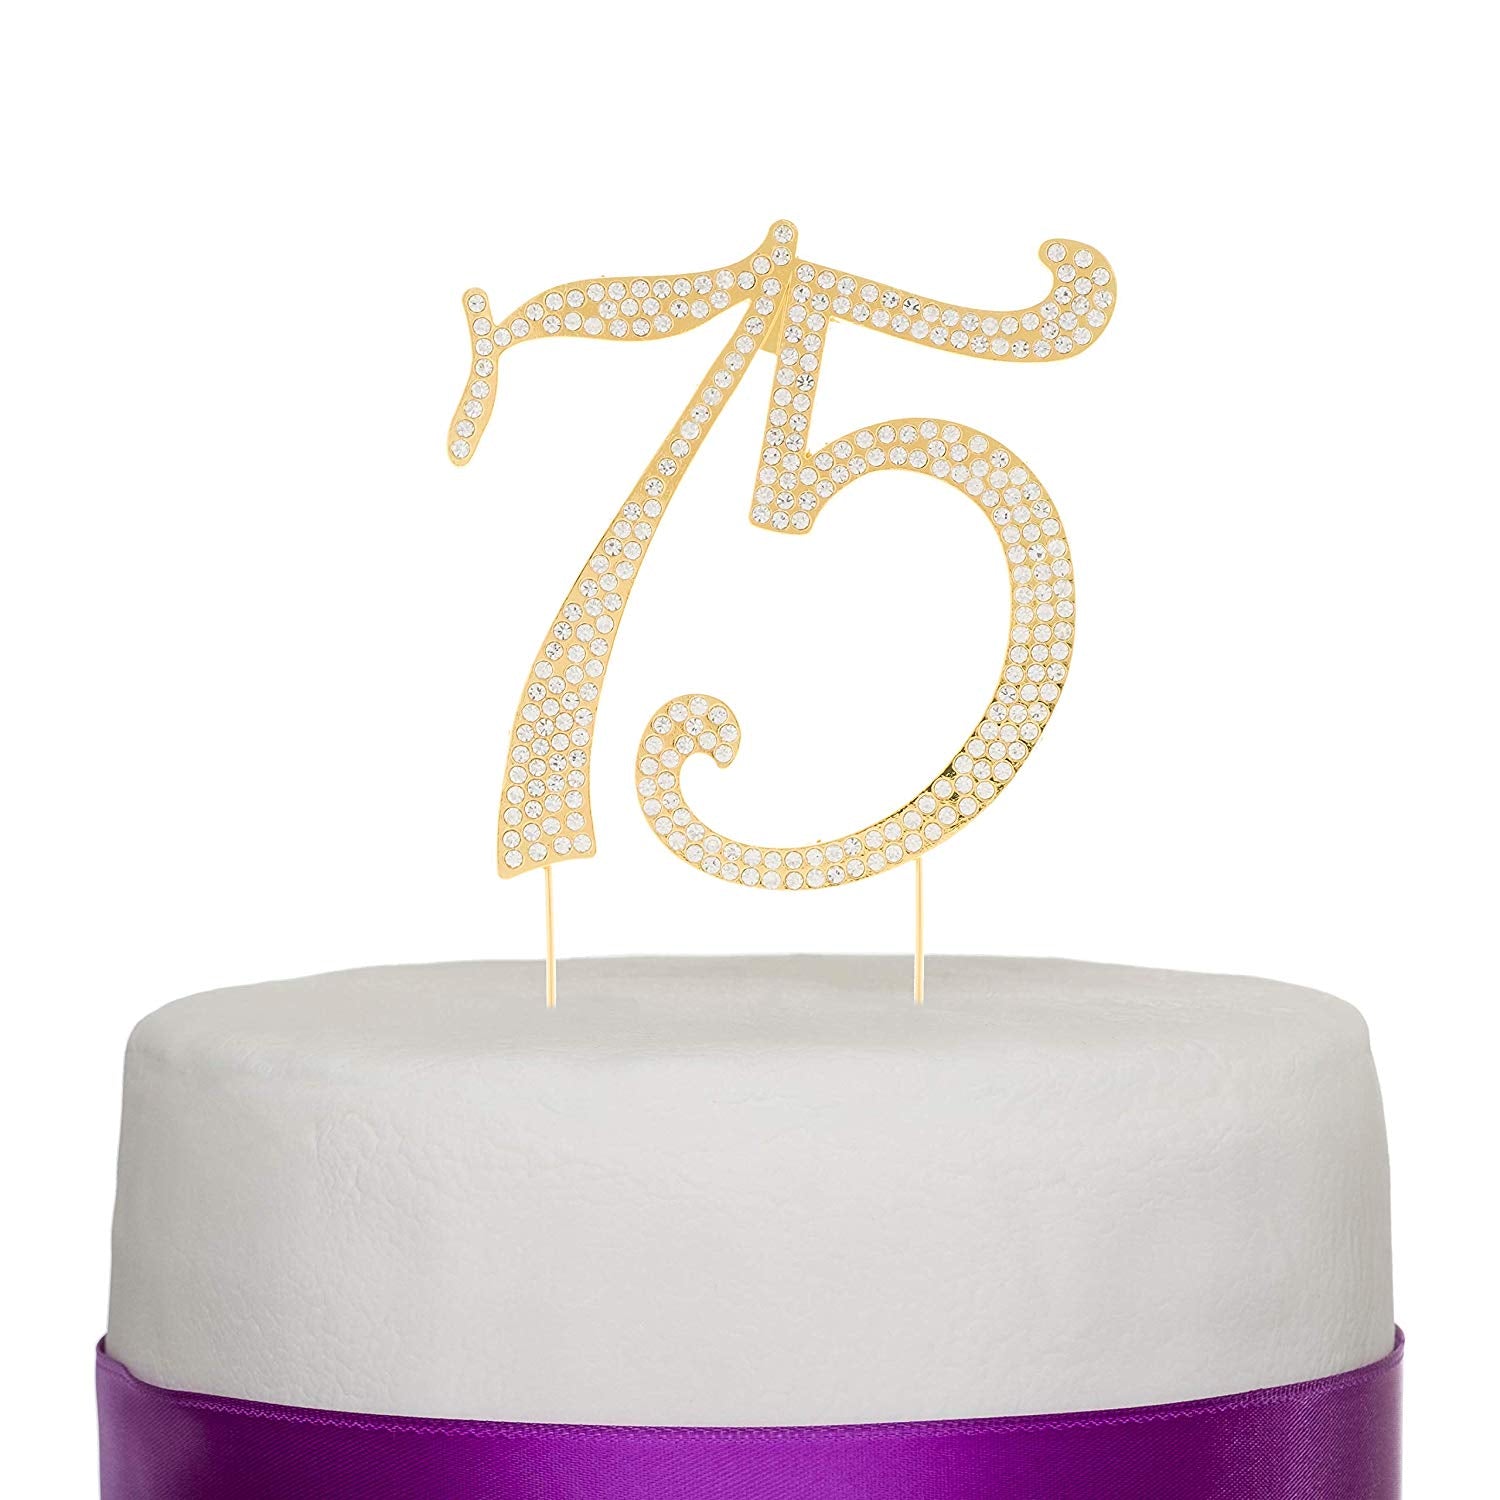 75 Cake Topper - Gold